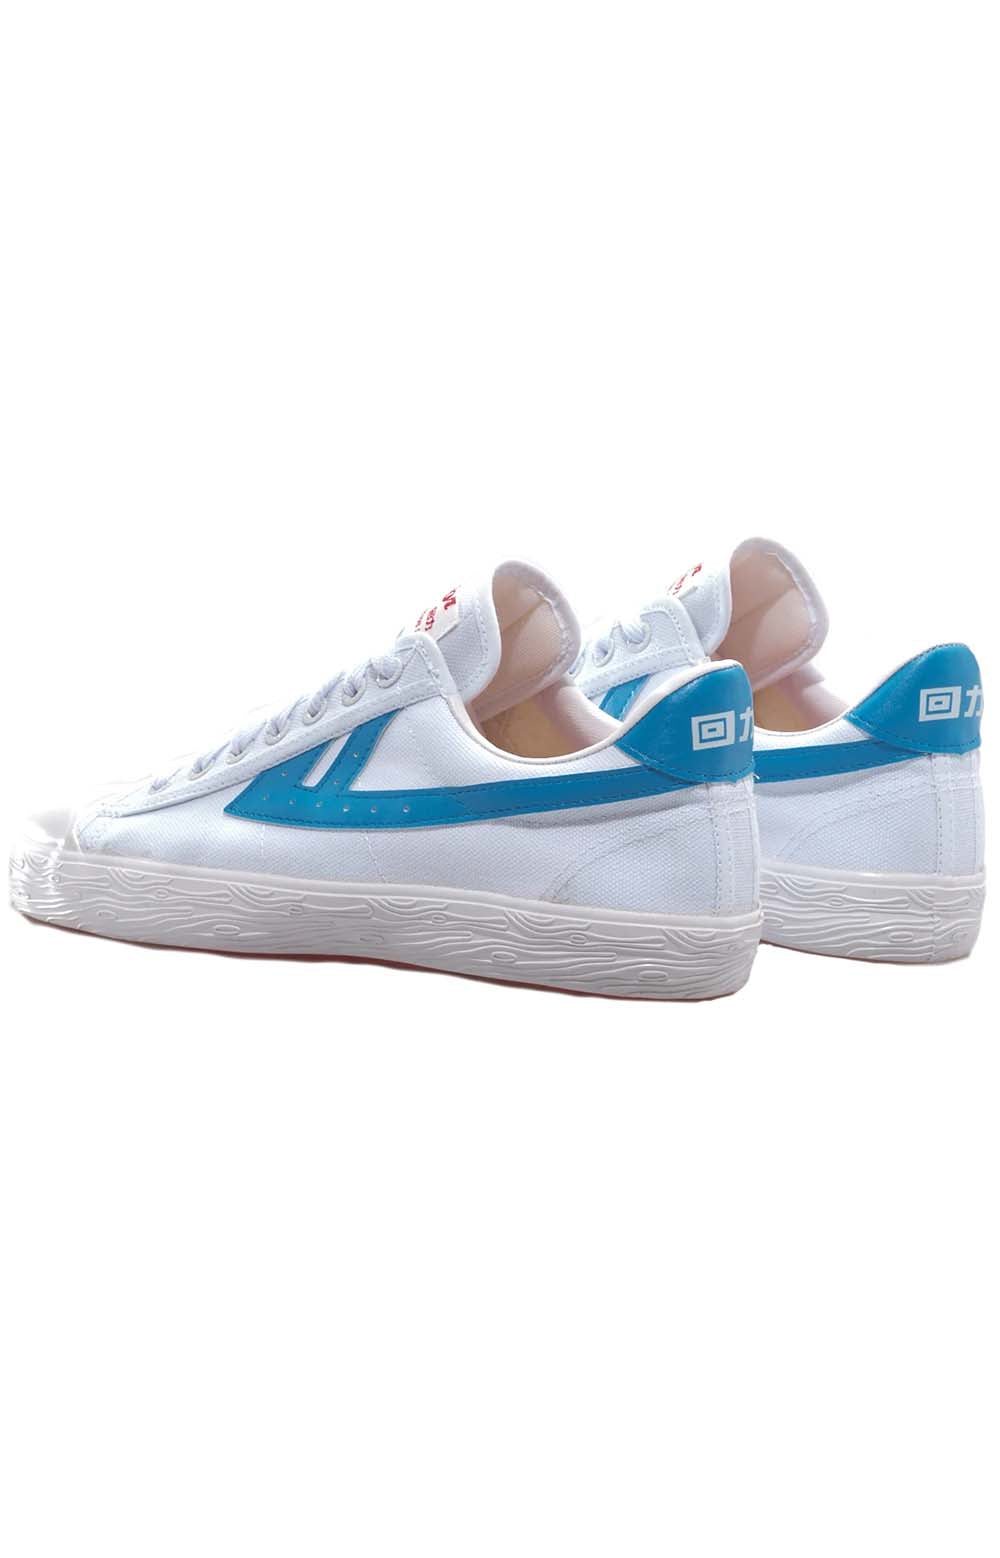 WB-1 Shoes - White/Blue